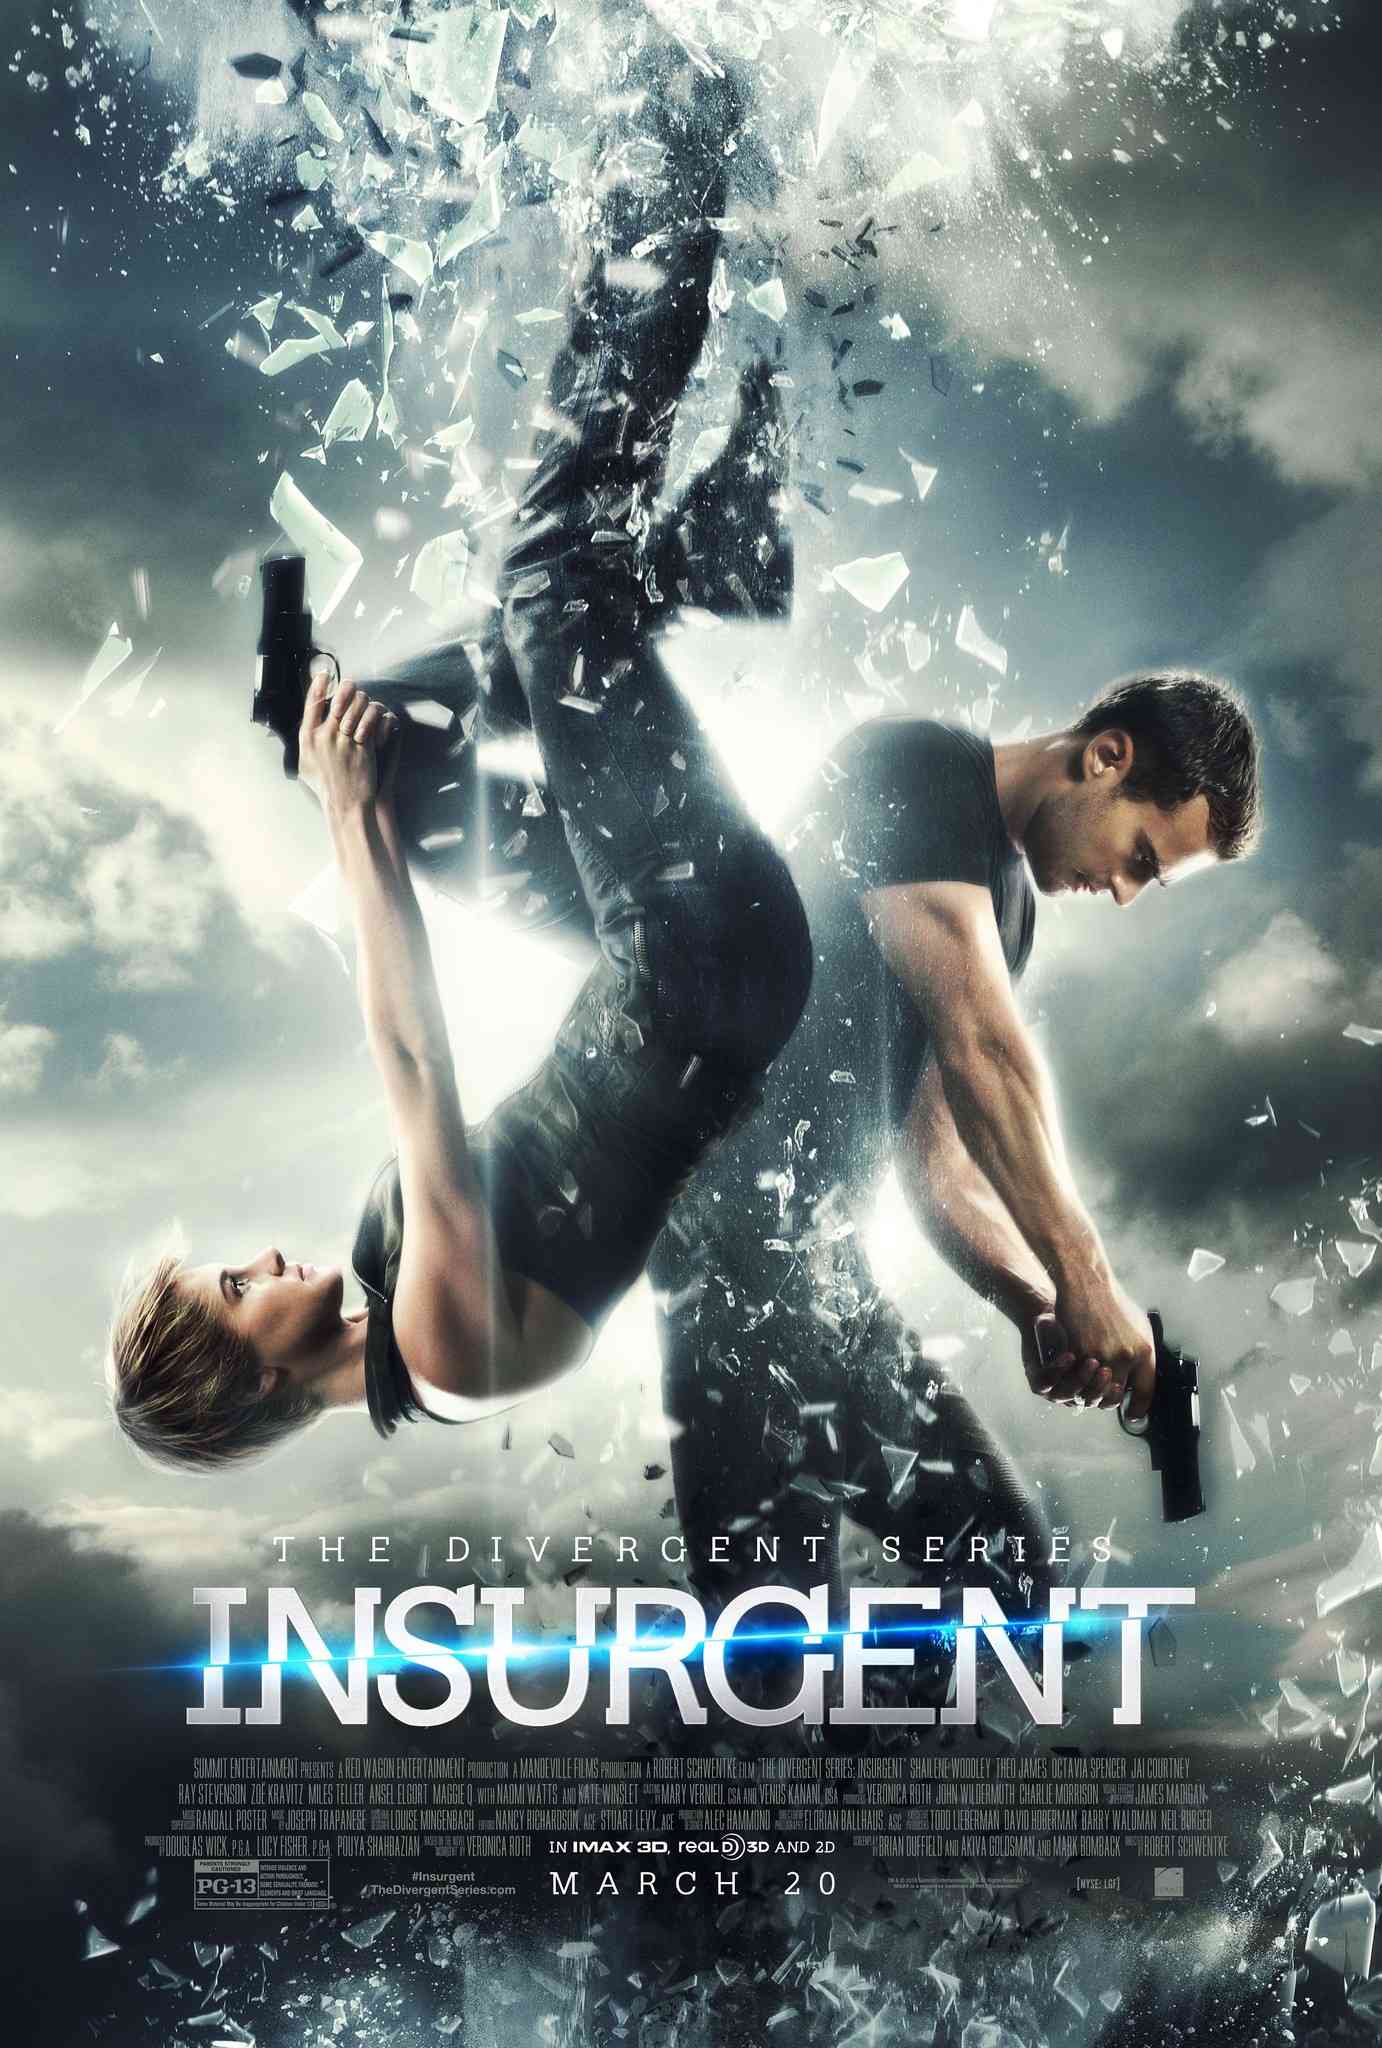 FULL MOVIE: Insurgent (2015)